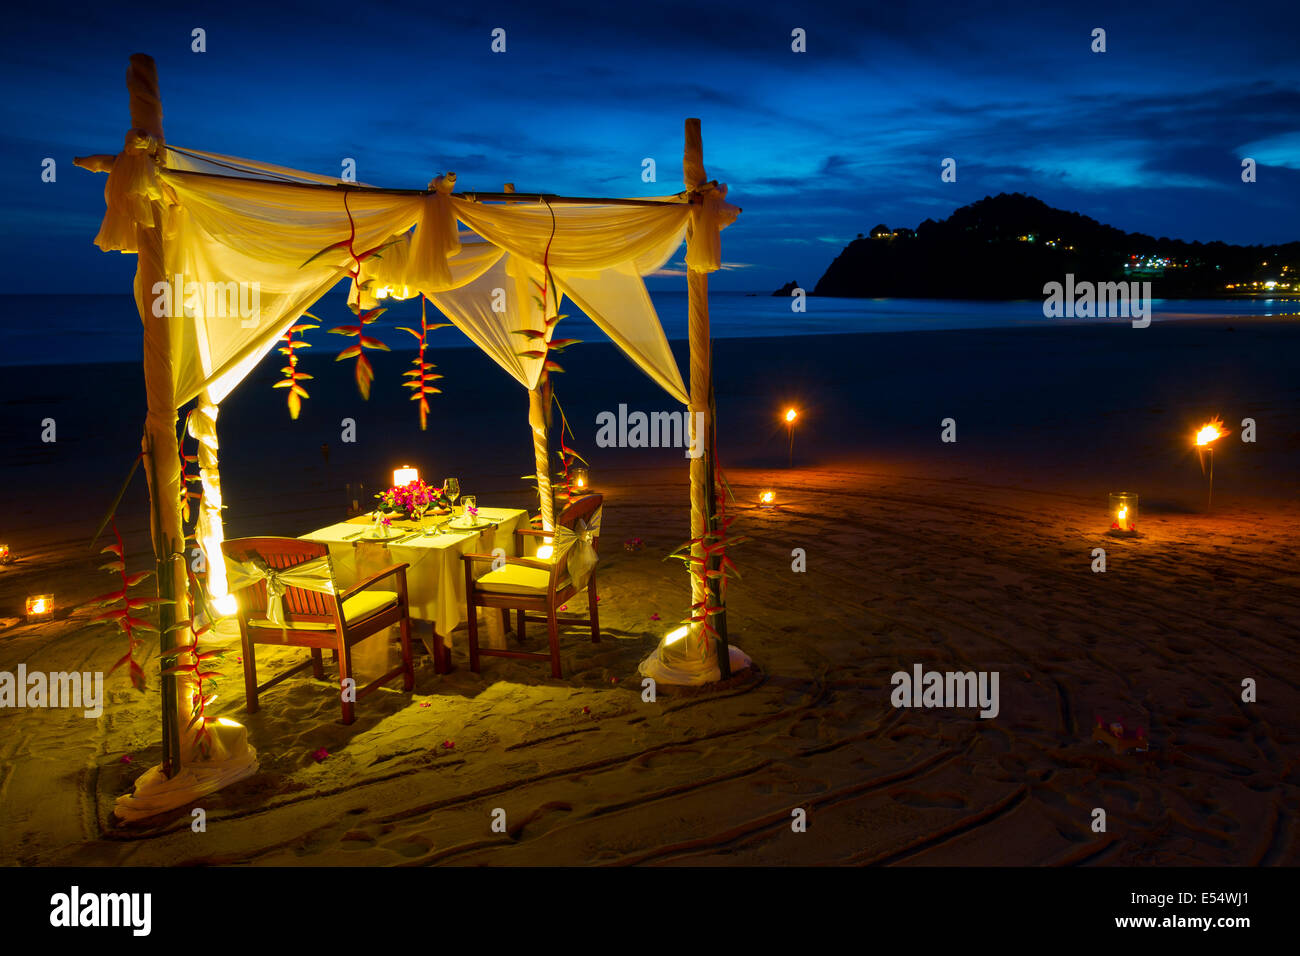 Romantic dinner. Ao kantiang. Ko Lanta island. Krabi province, Thailand, Asia. Stock Photo